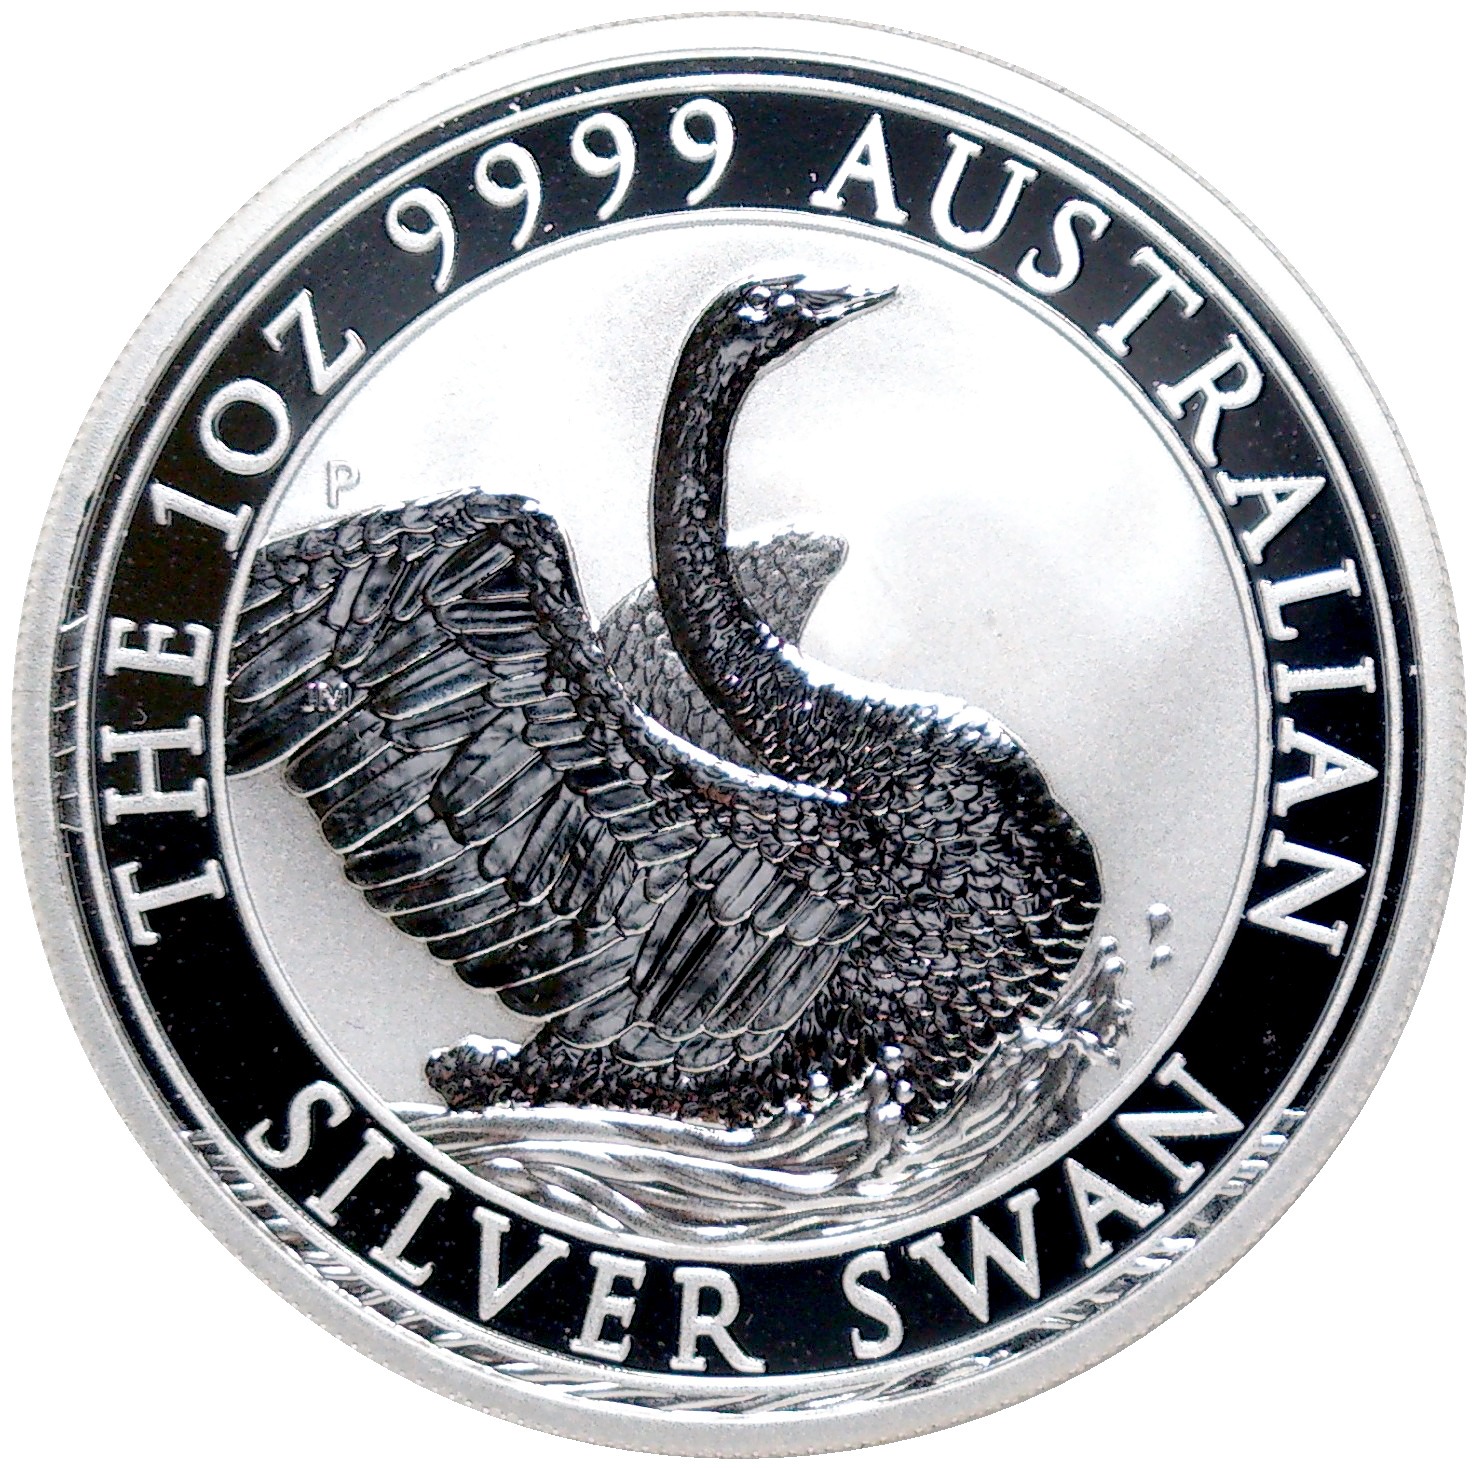 1 доллар австралия серебро